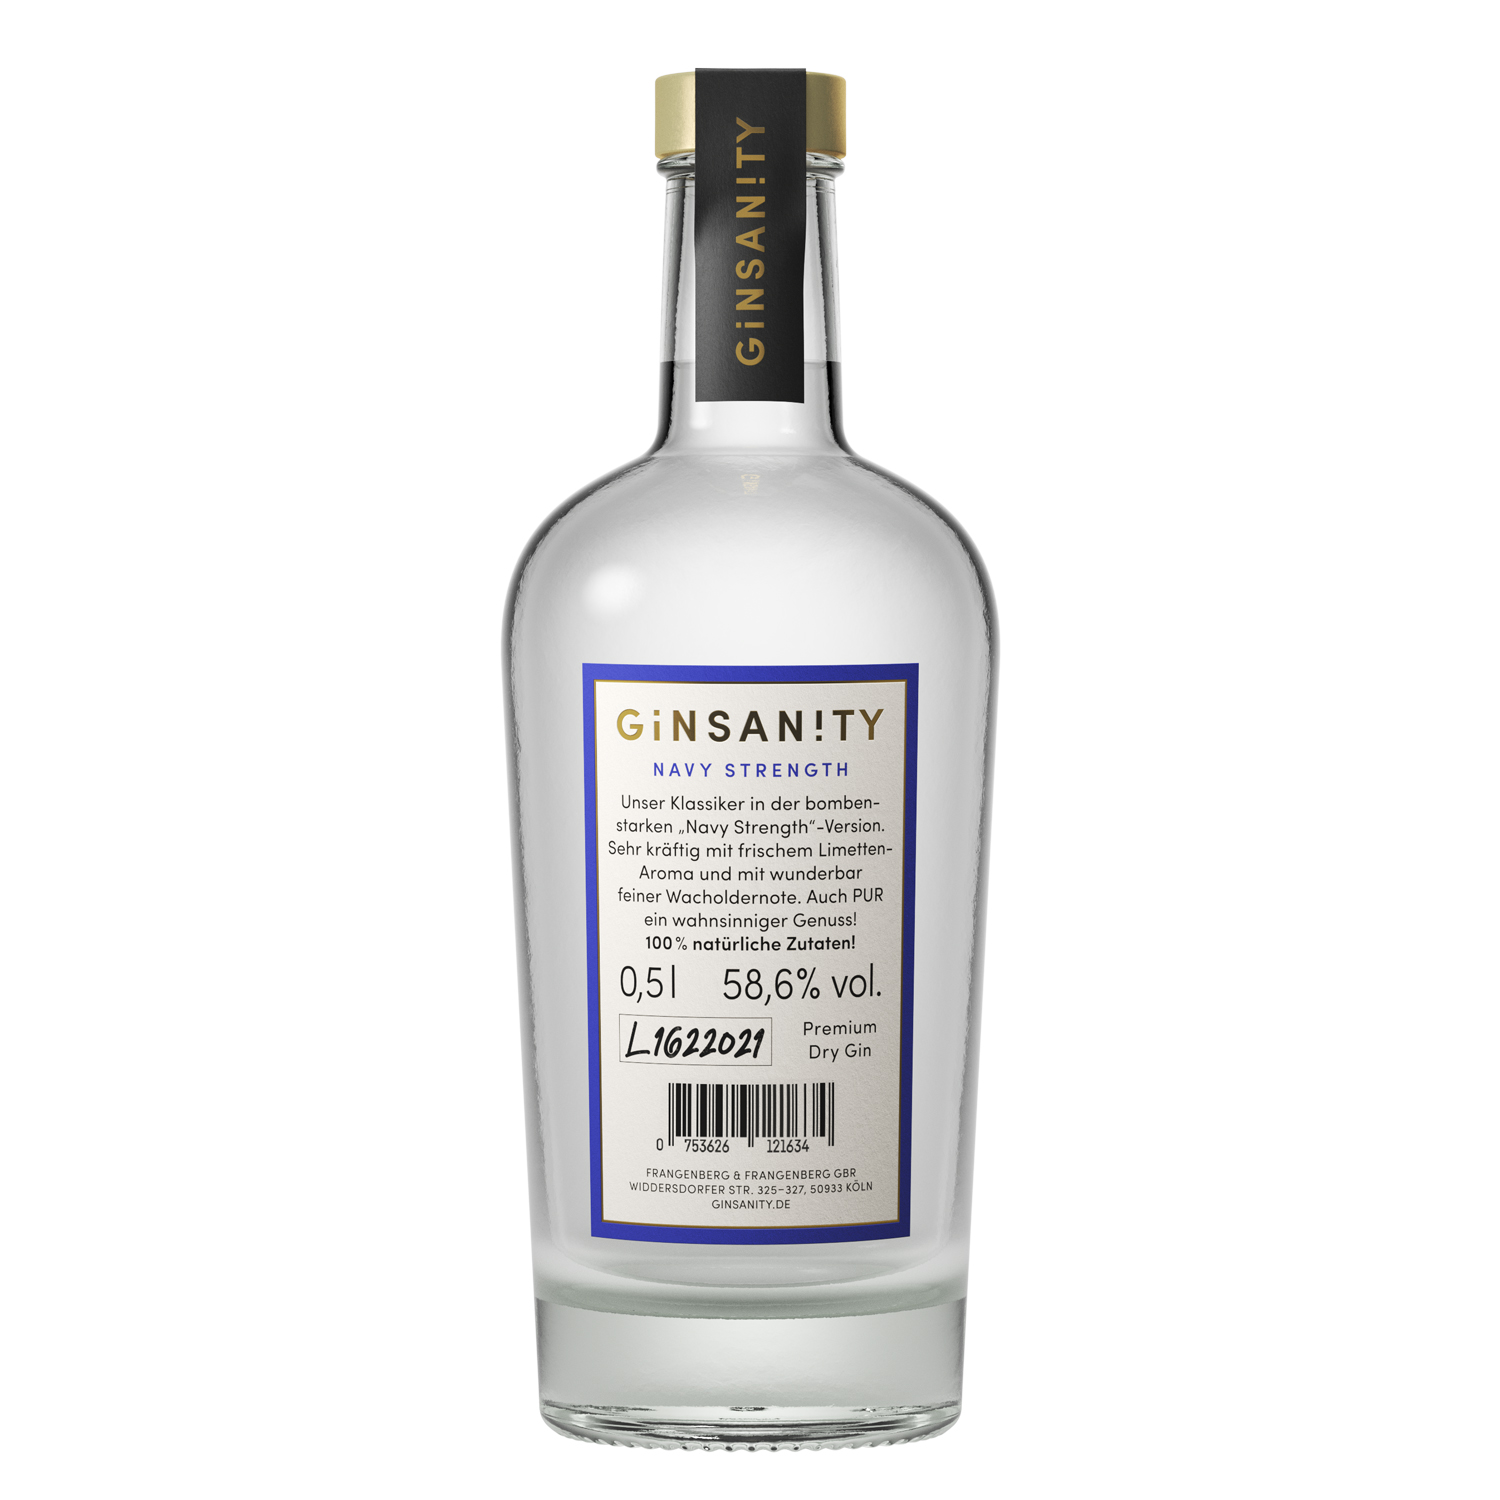 Ginsanity Navy Strength Premium Dry Gin / 58,6% Vol. 0,5 ltr.